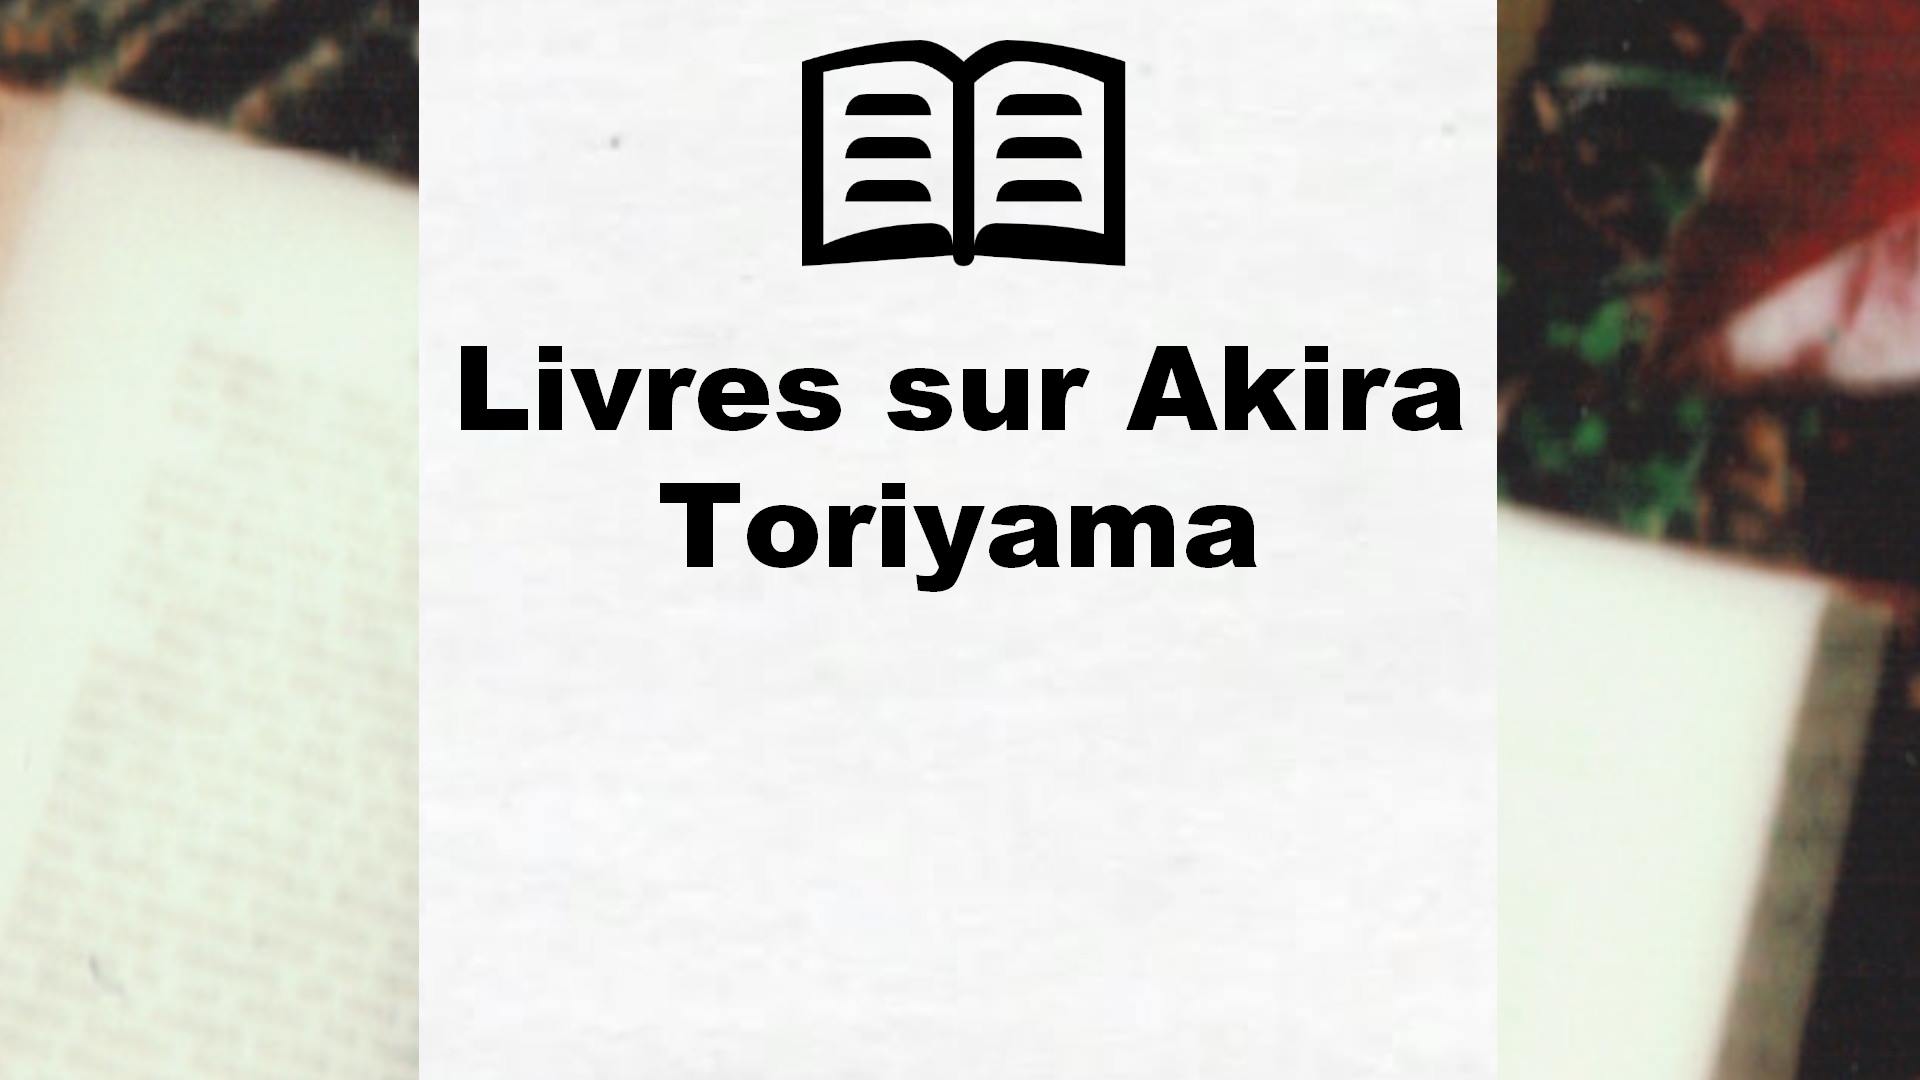 Livres sur Akira Toriyama